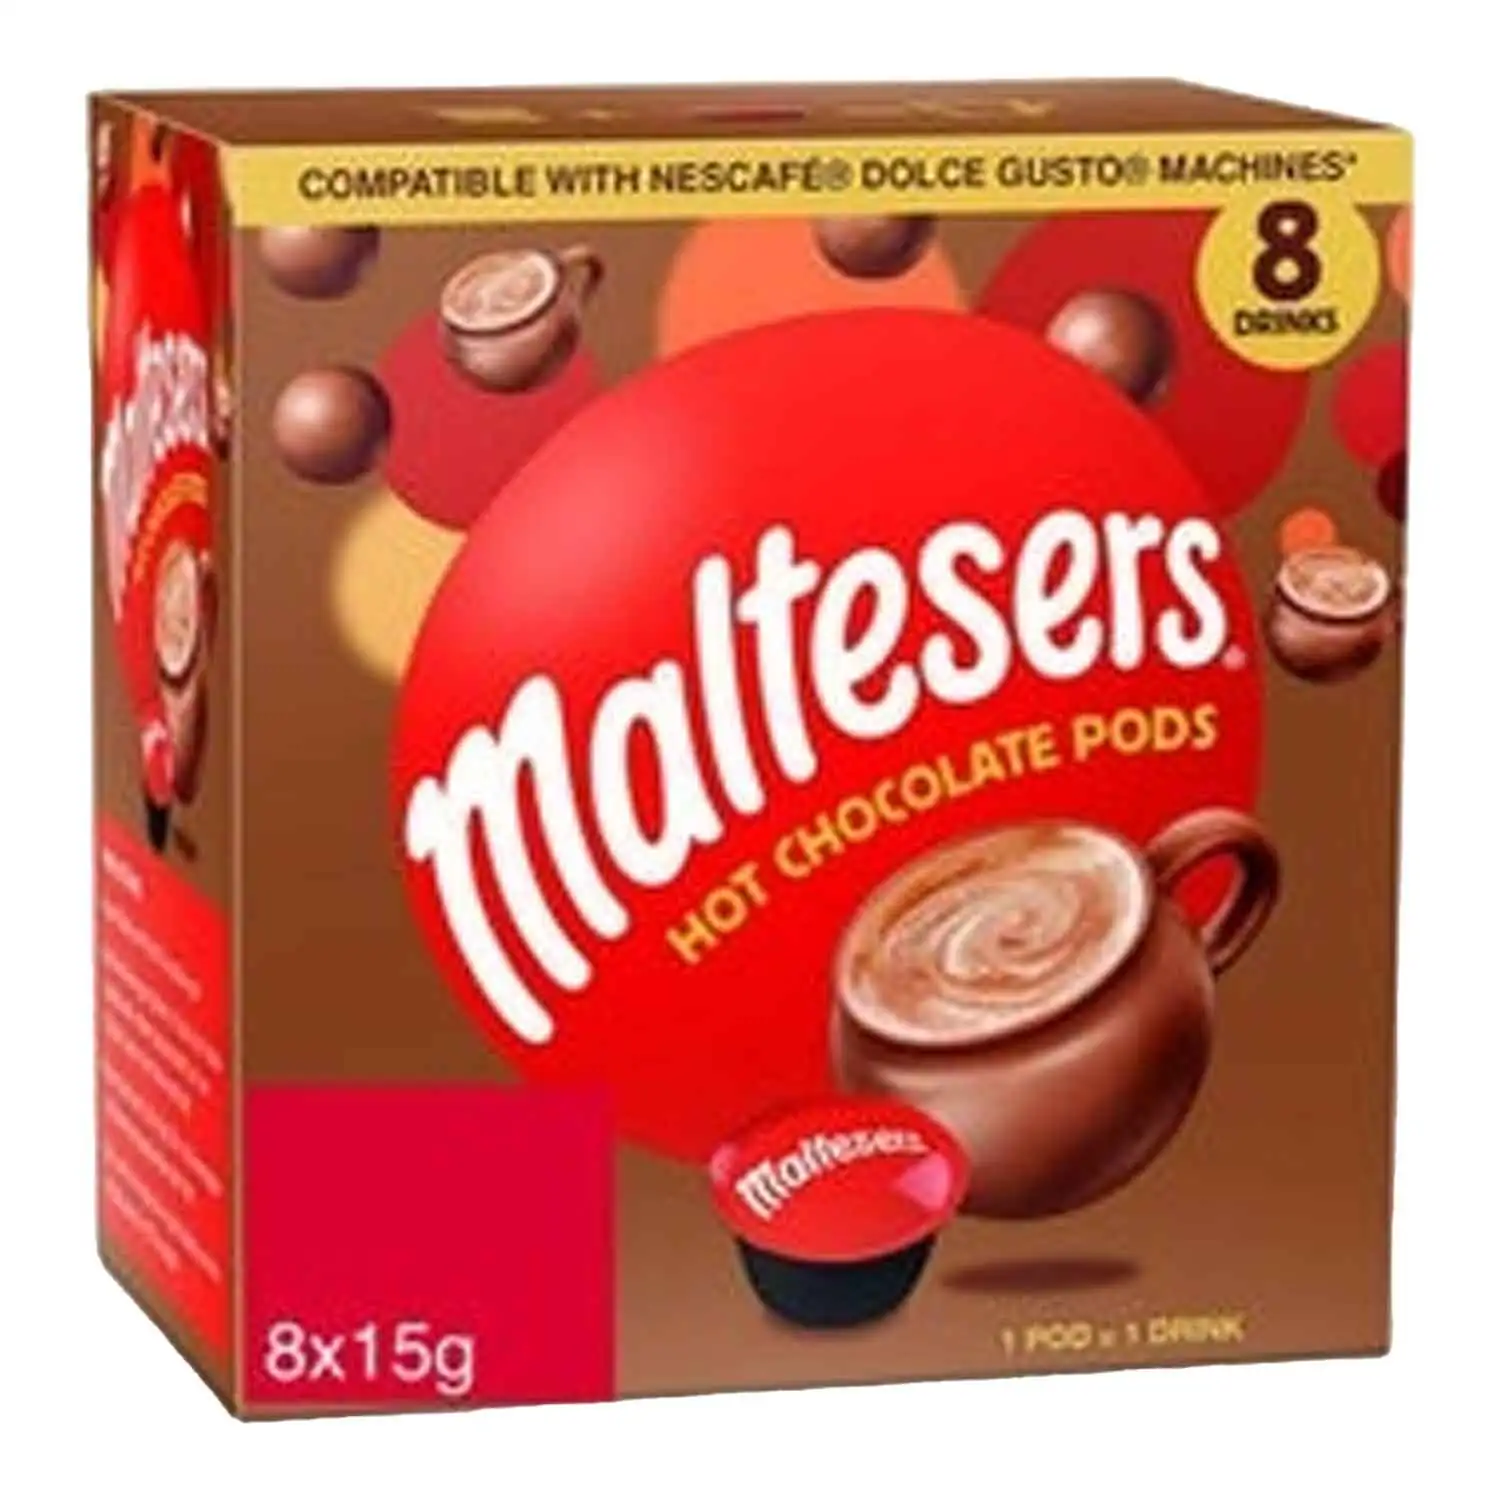 Maltesers hot chocolate pods 8x15g - Buy at Real Tobacco